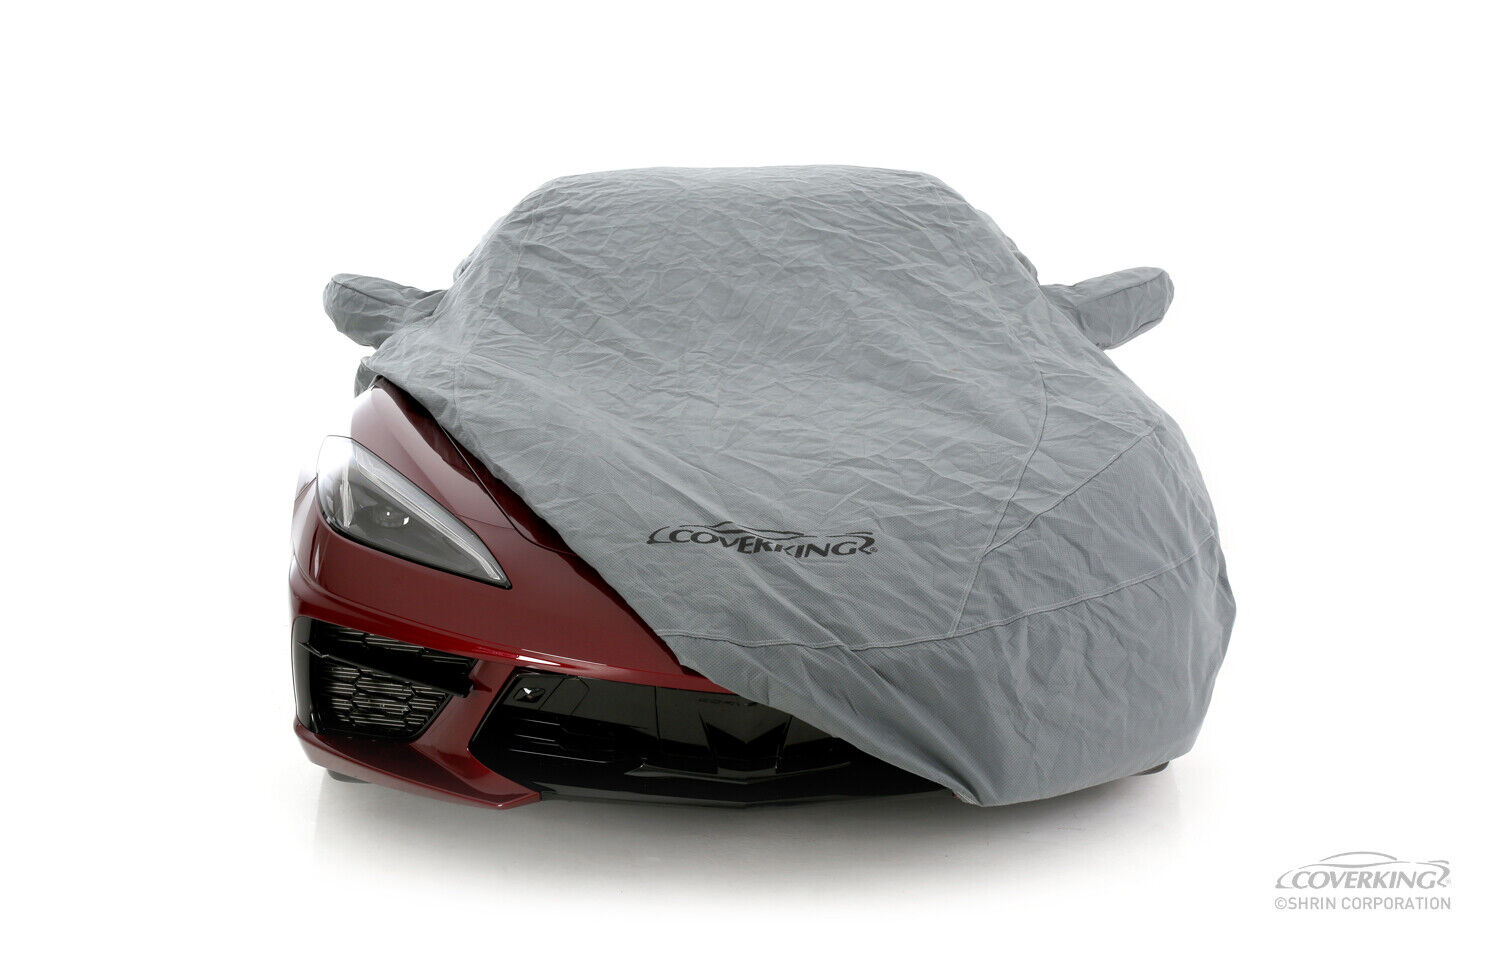 Coverking Mosom Plus Custom Tailored Car Cover for Chevy Corvette - 5 Layers